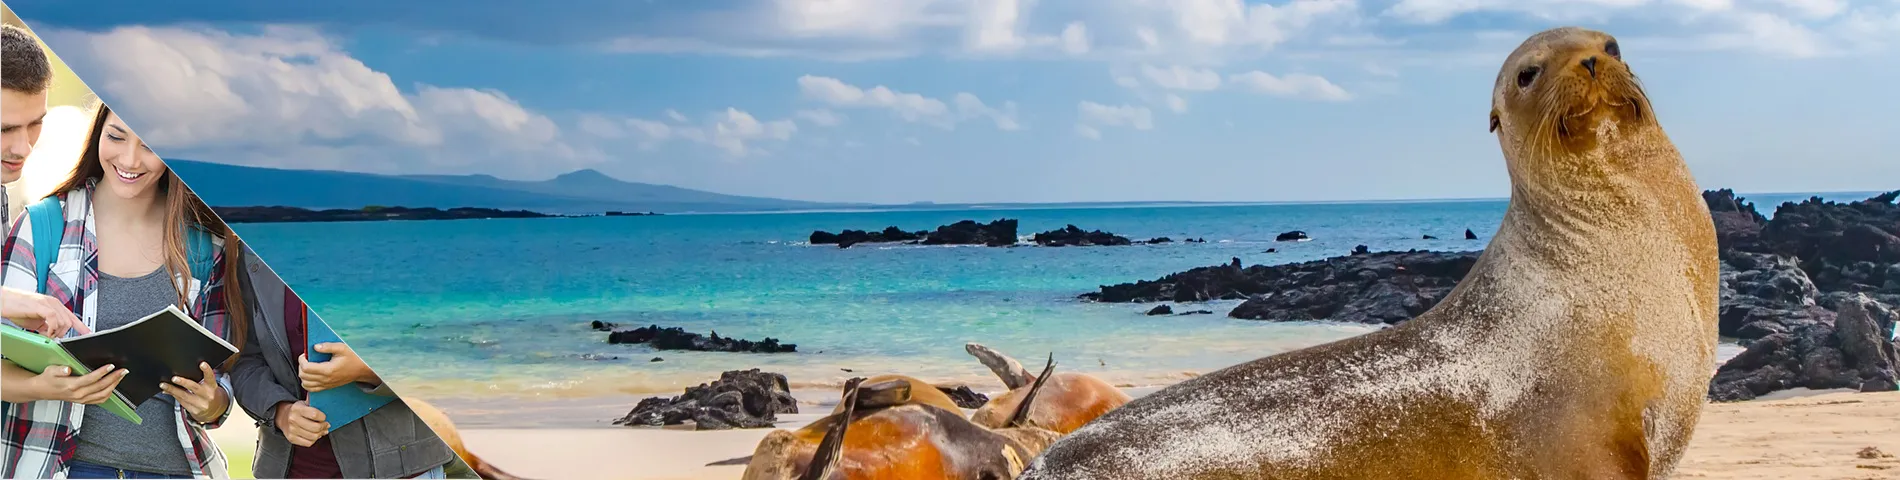 Isole Galapagos - Aula itinerante